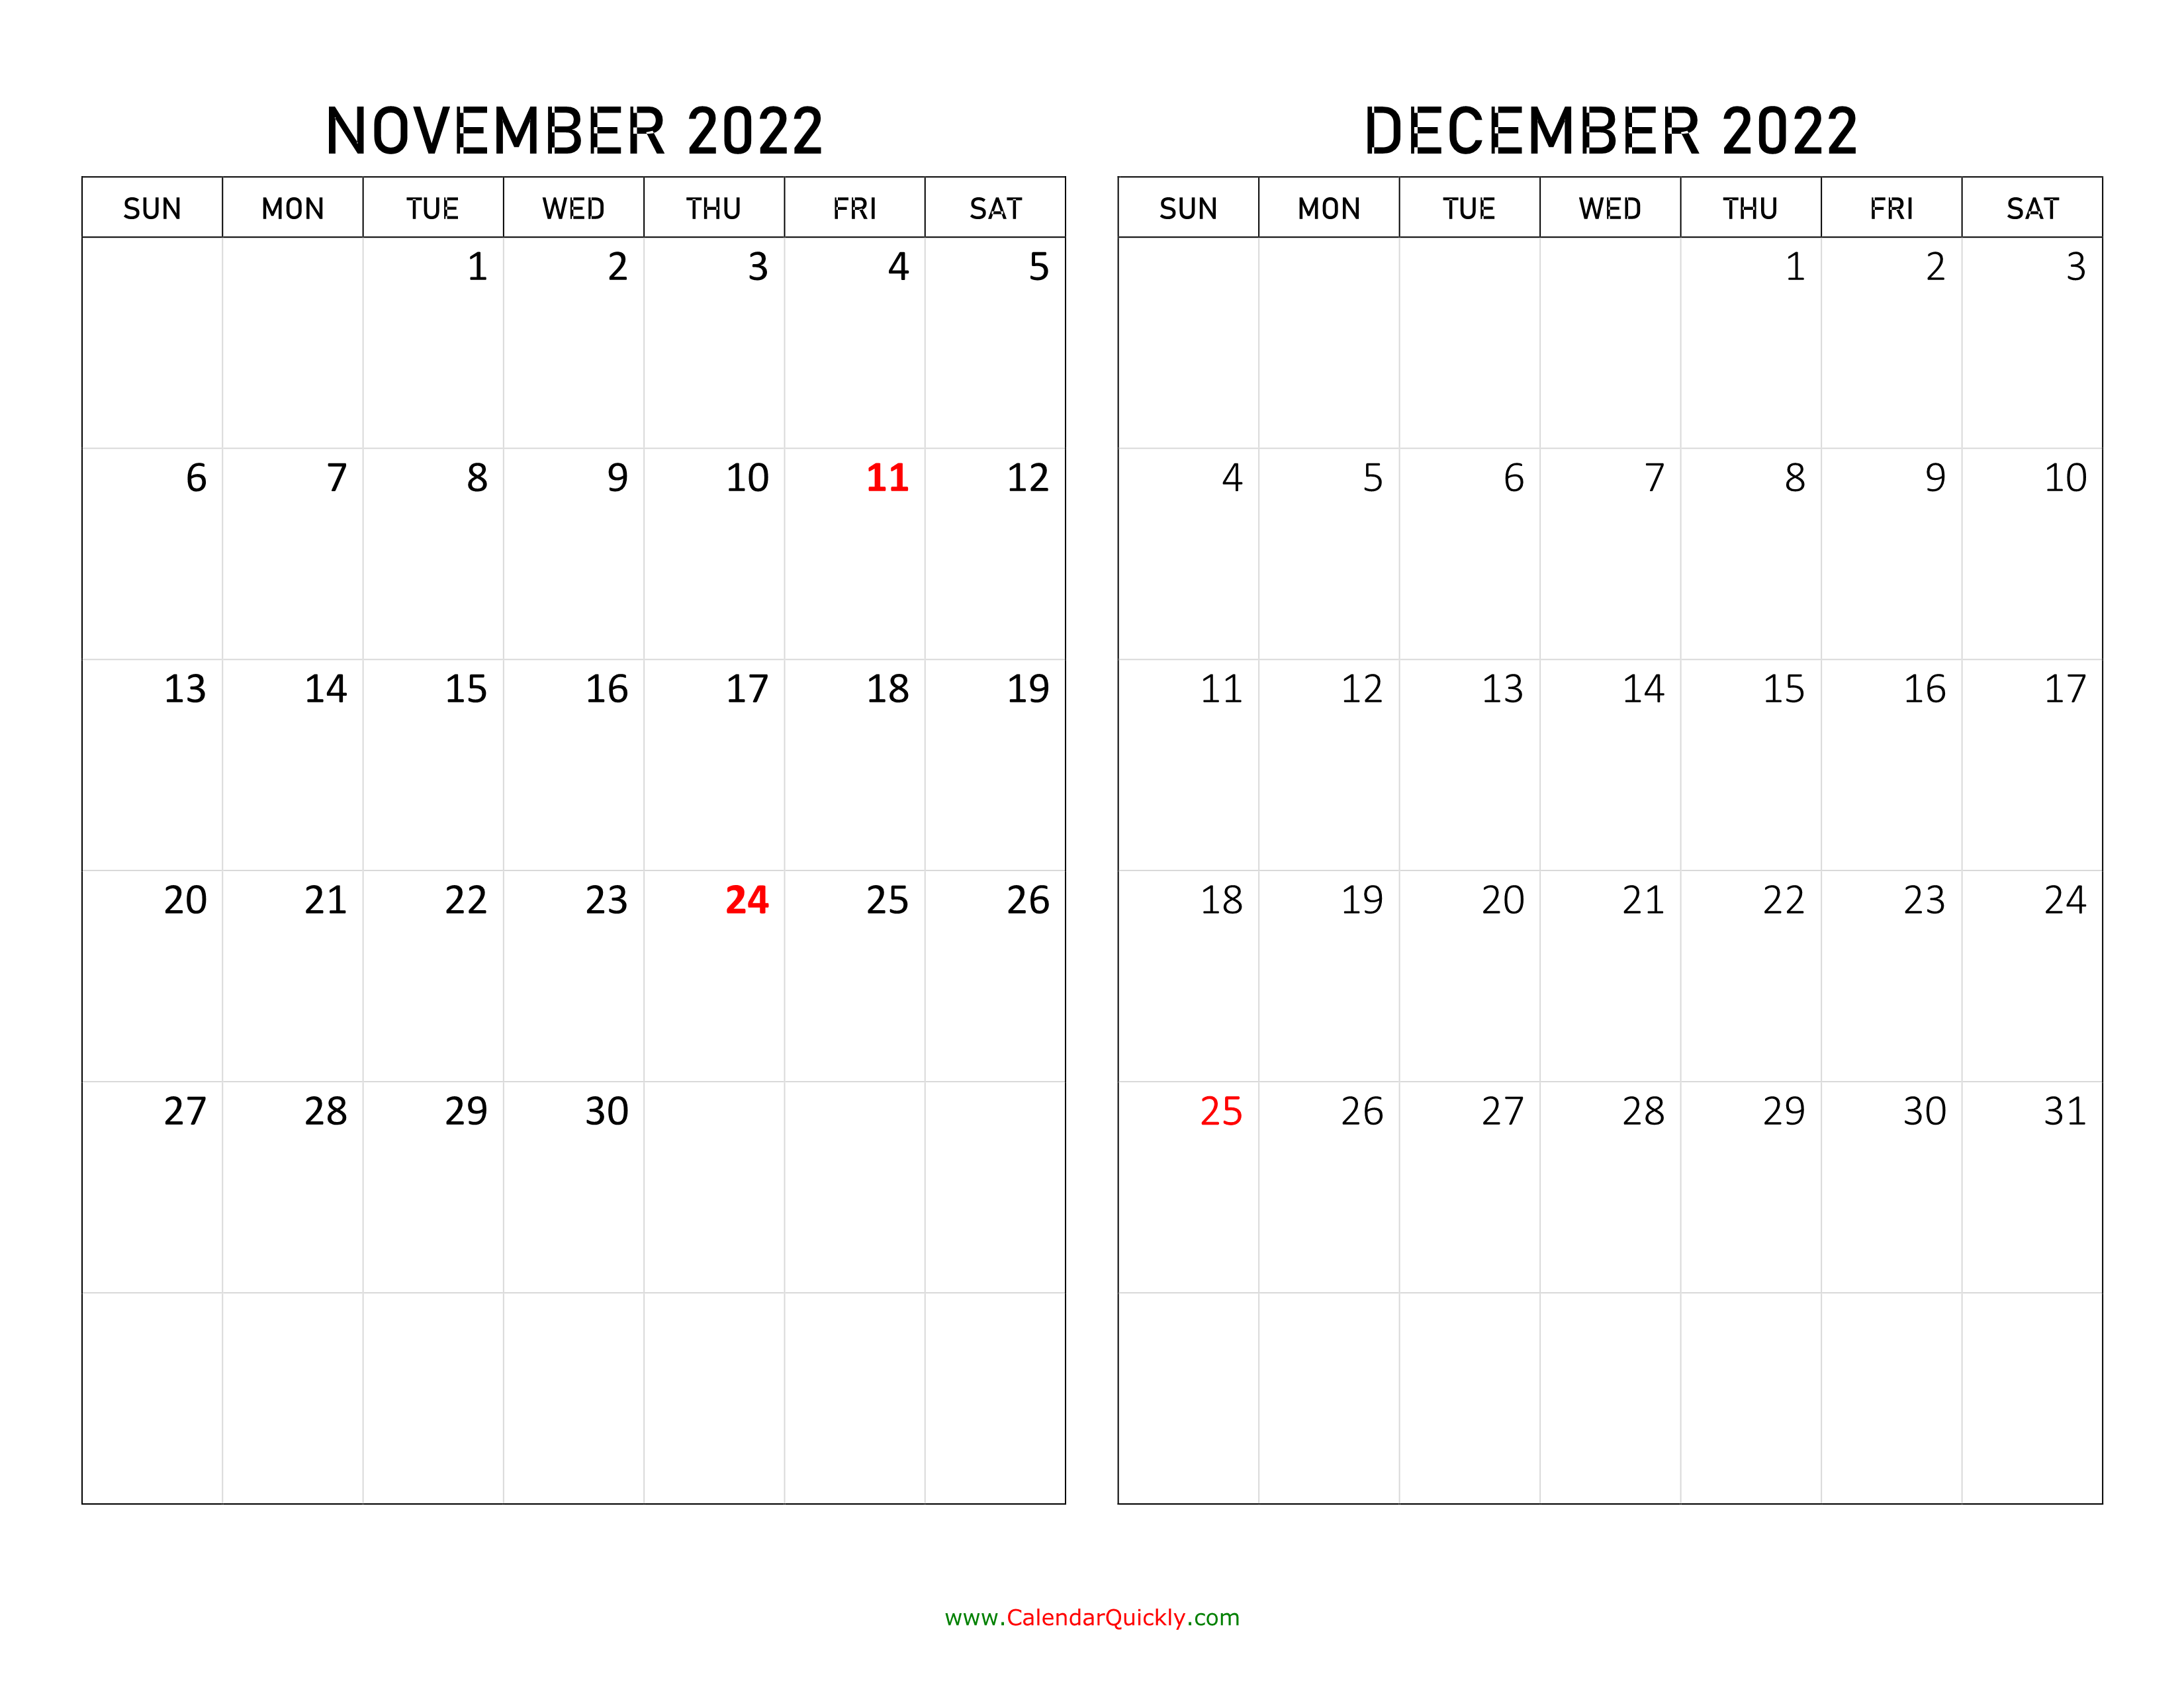 November and December 2022 Calendar Calendar Quickly